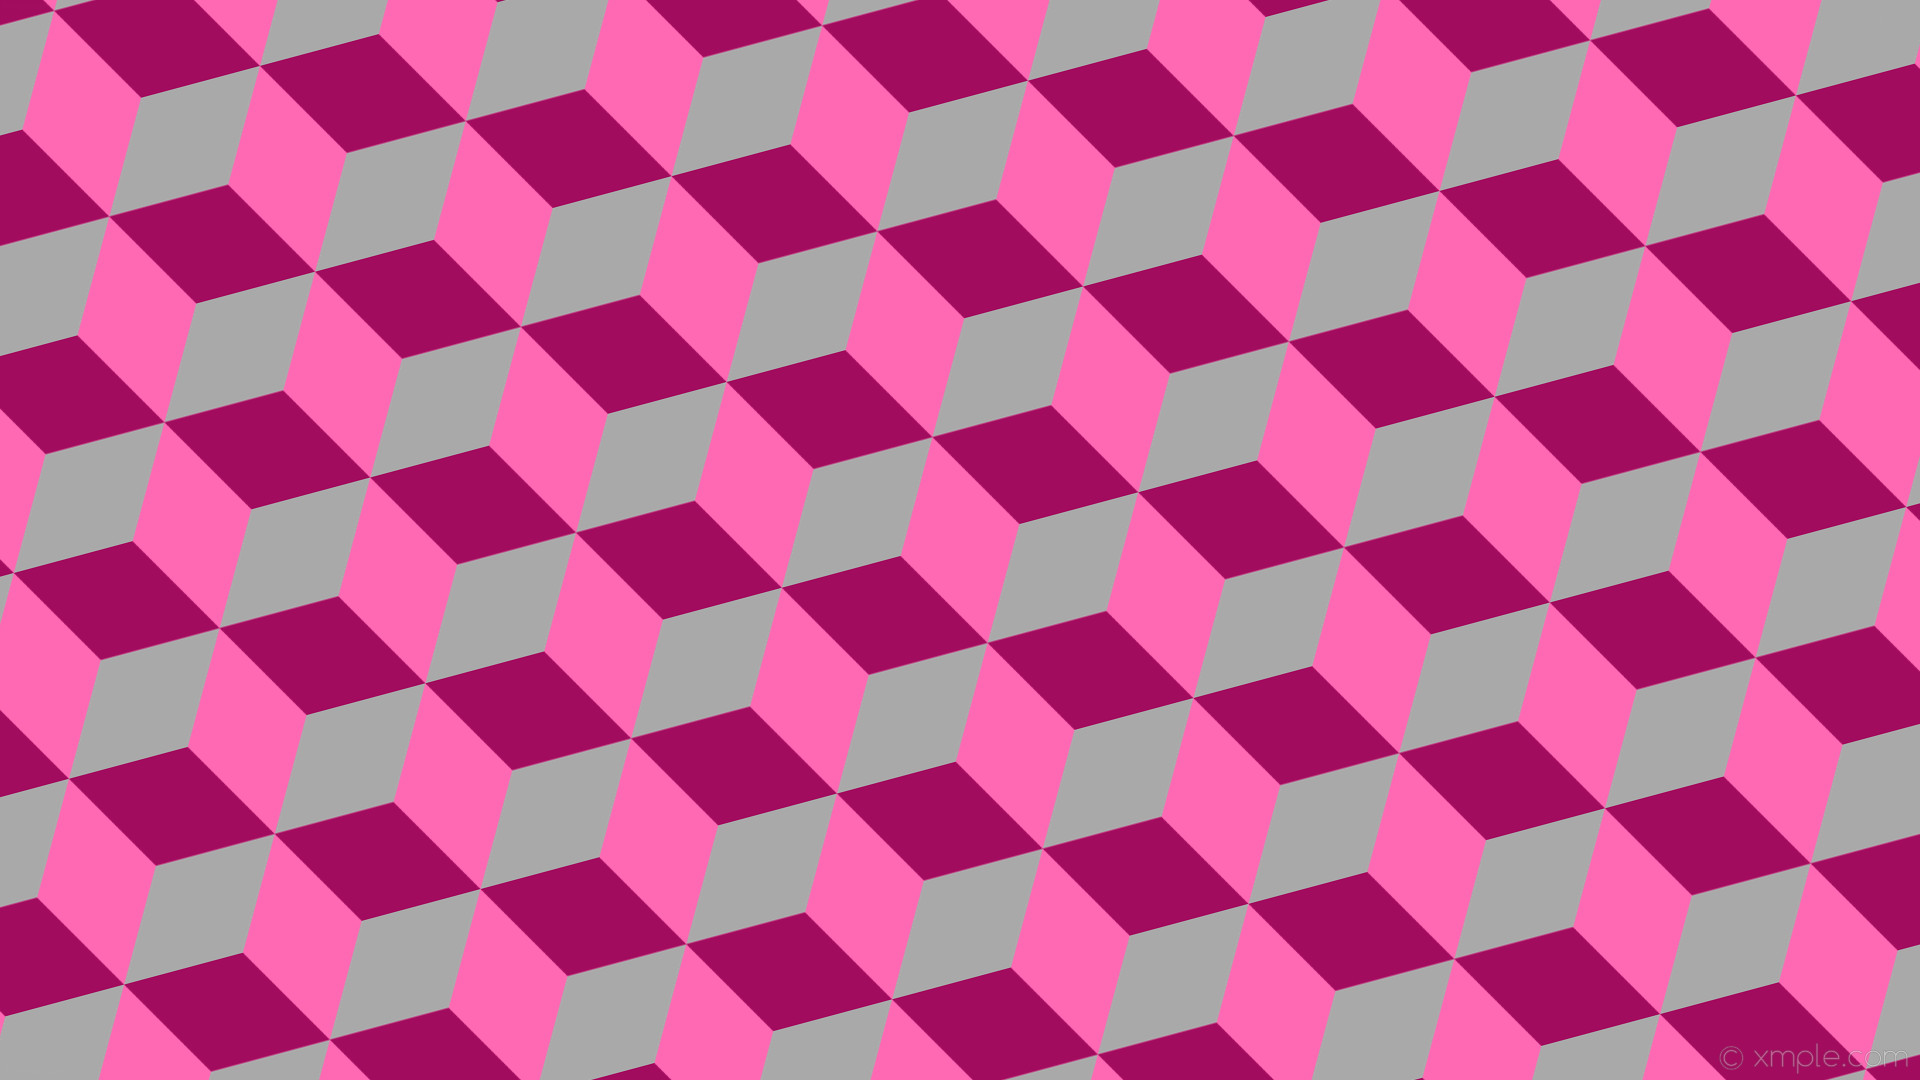 1920x1080 wallpaper pink 3d cubes grey hot pink dark gray #ff69b4 #a9a9a9 #a20c5e 285